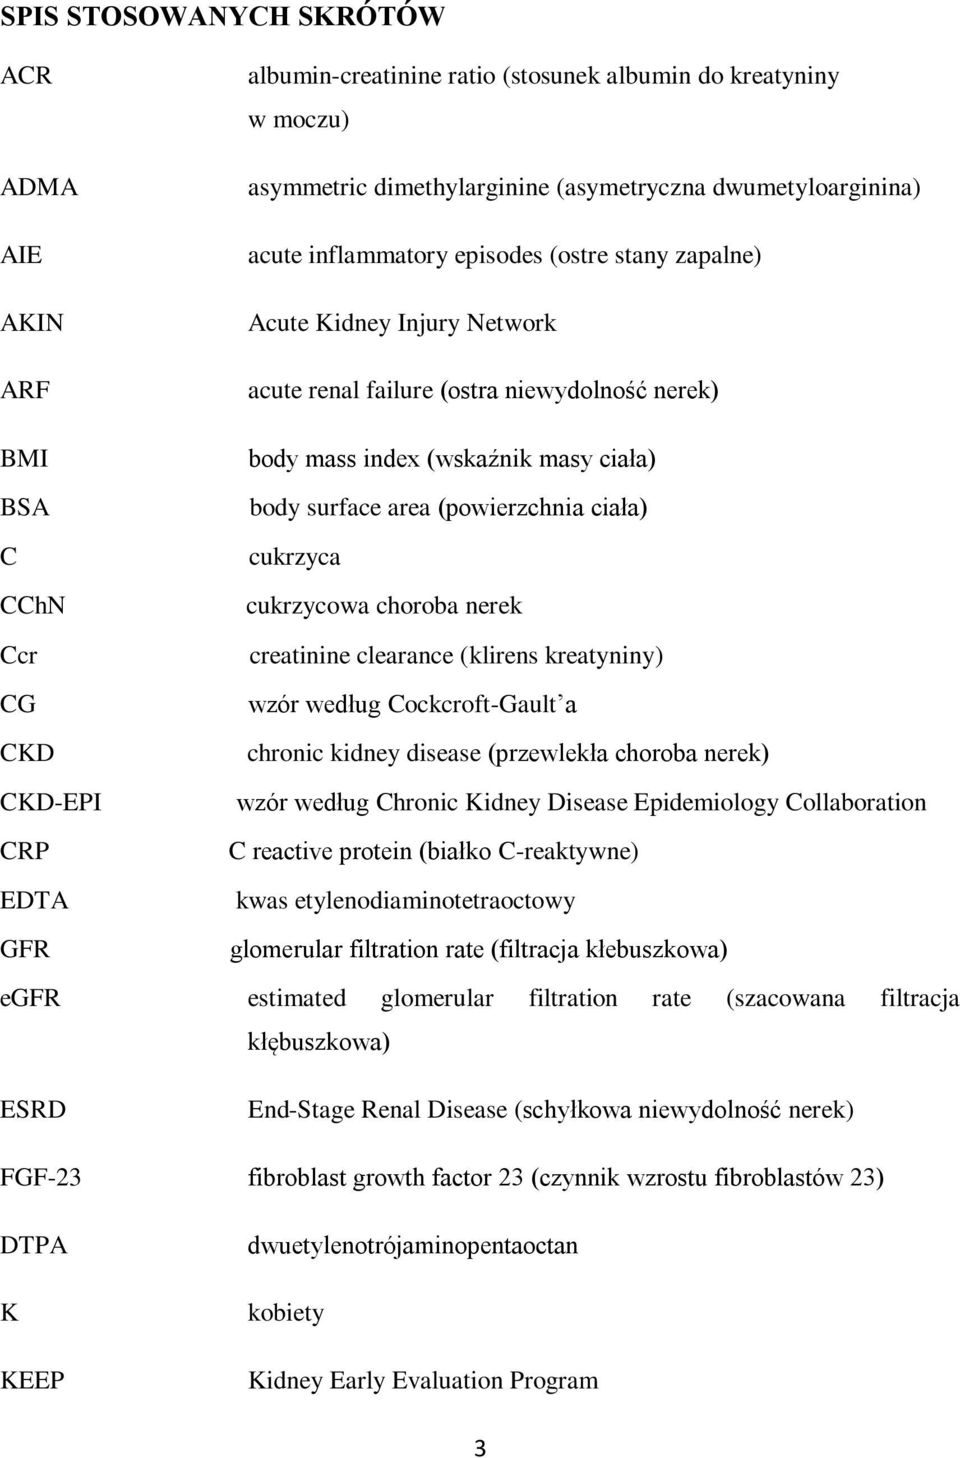 cukrzyca cukrzycowa choroba nerek Ccr creatinine clearance (klirens kreatyniny) CG wzór według Cockcroft-Gault a CKD chronic kidney disease (przewlekła choroba nerek) CKD-EPI wzór według Chronic